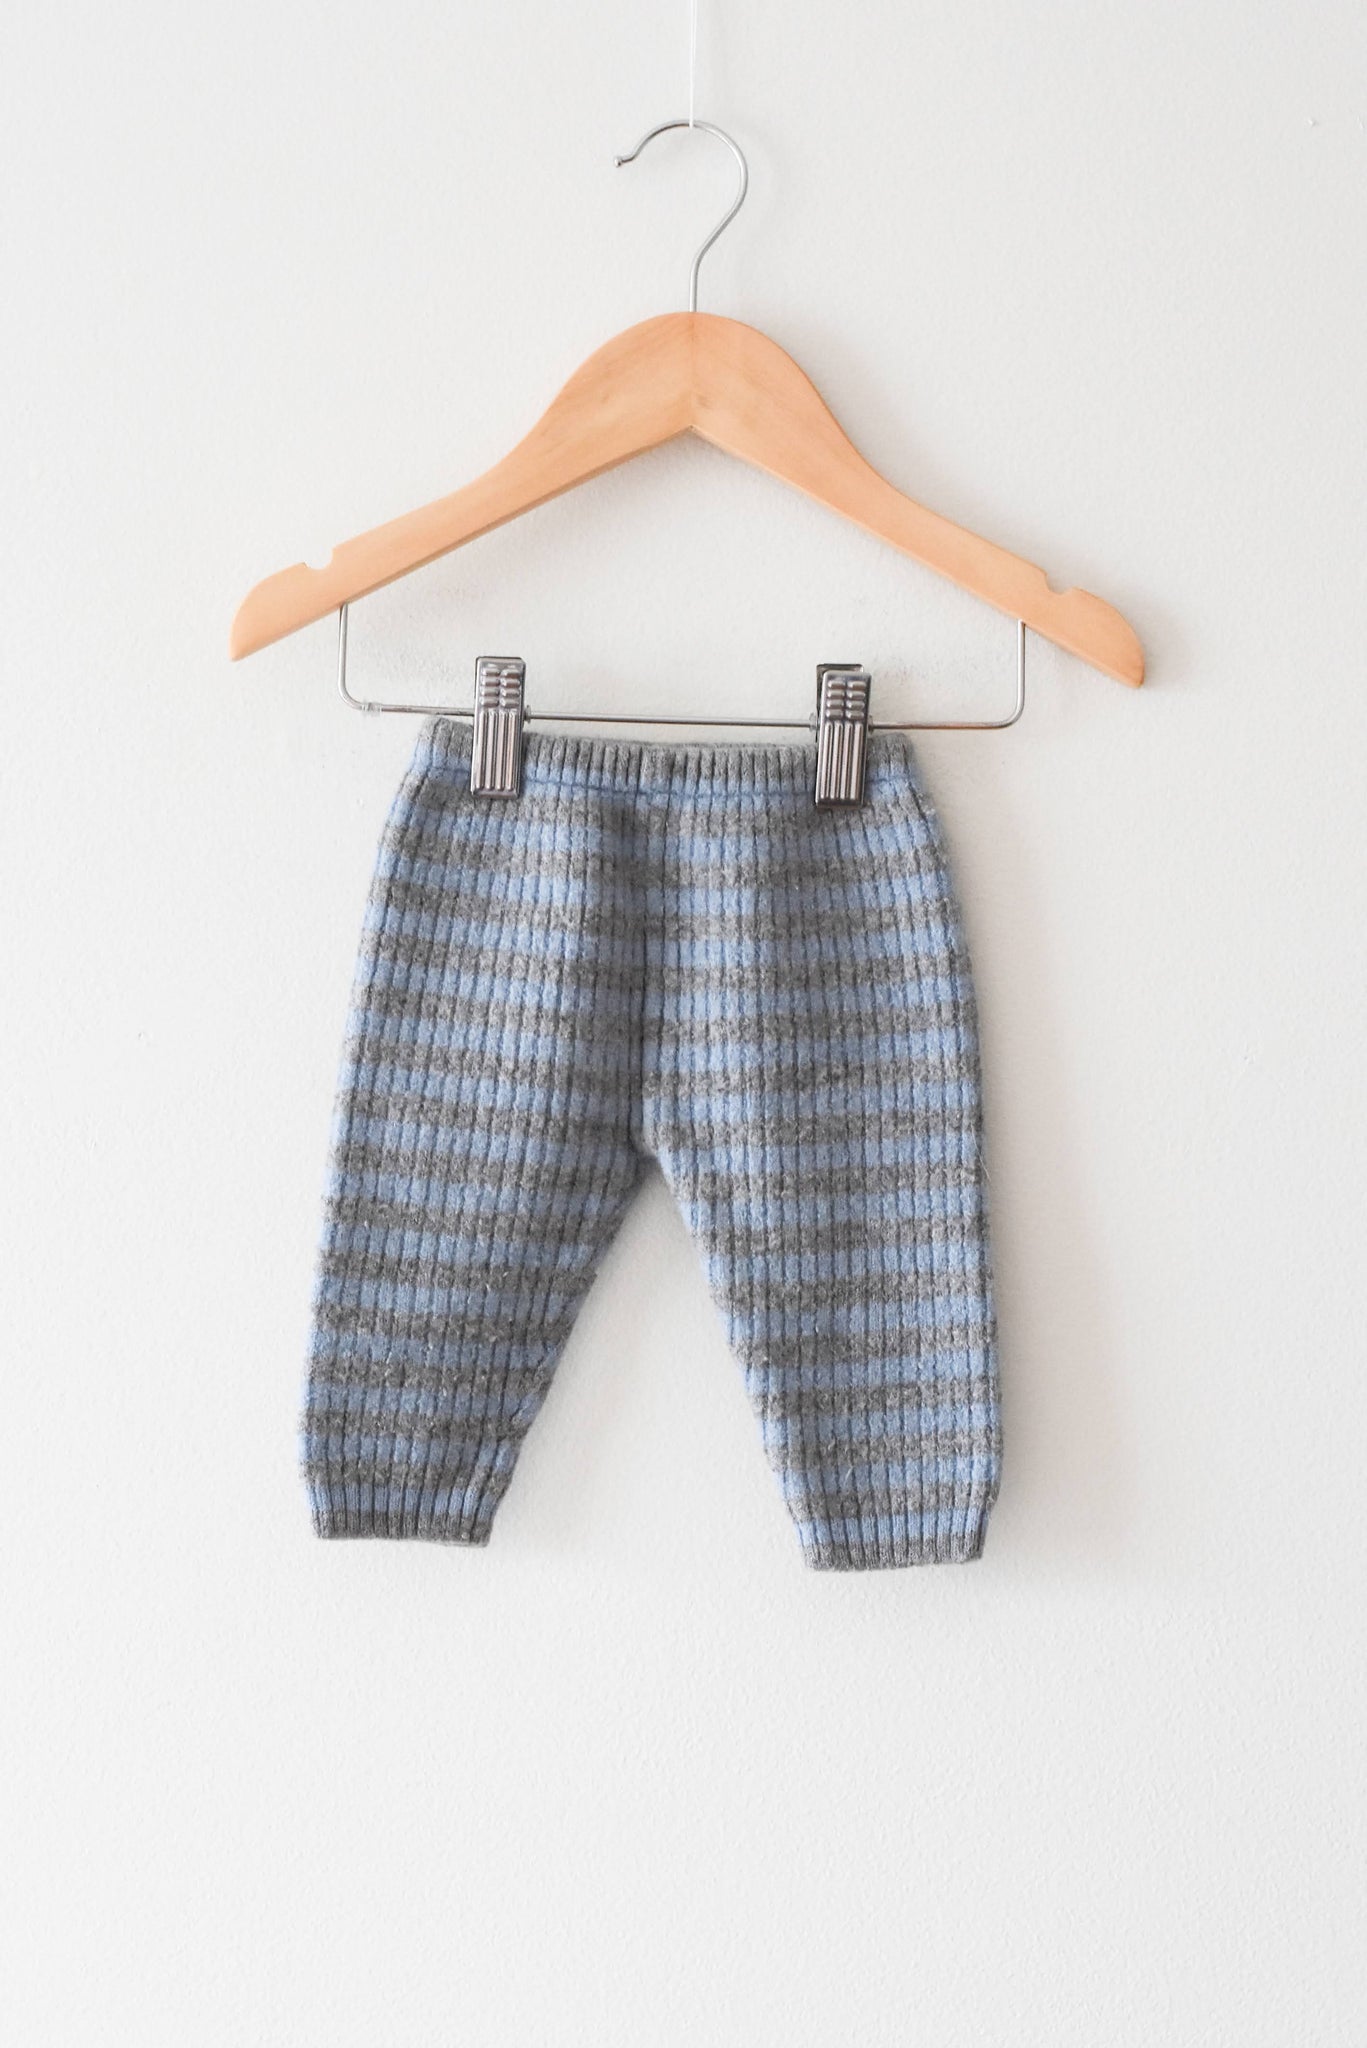 Nui Wool Pants • 6-12 months